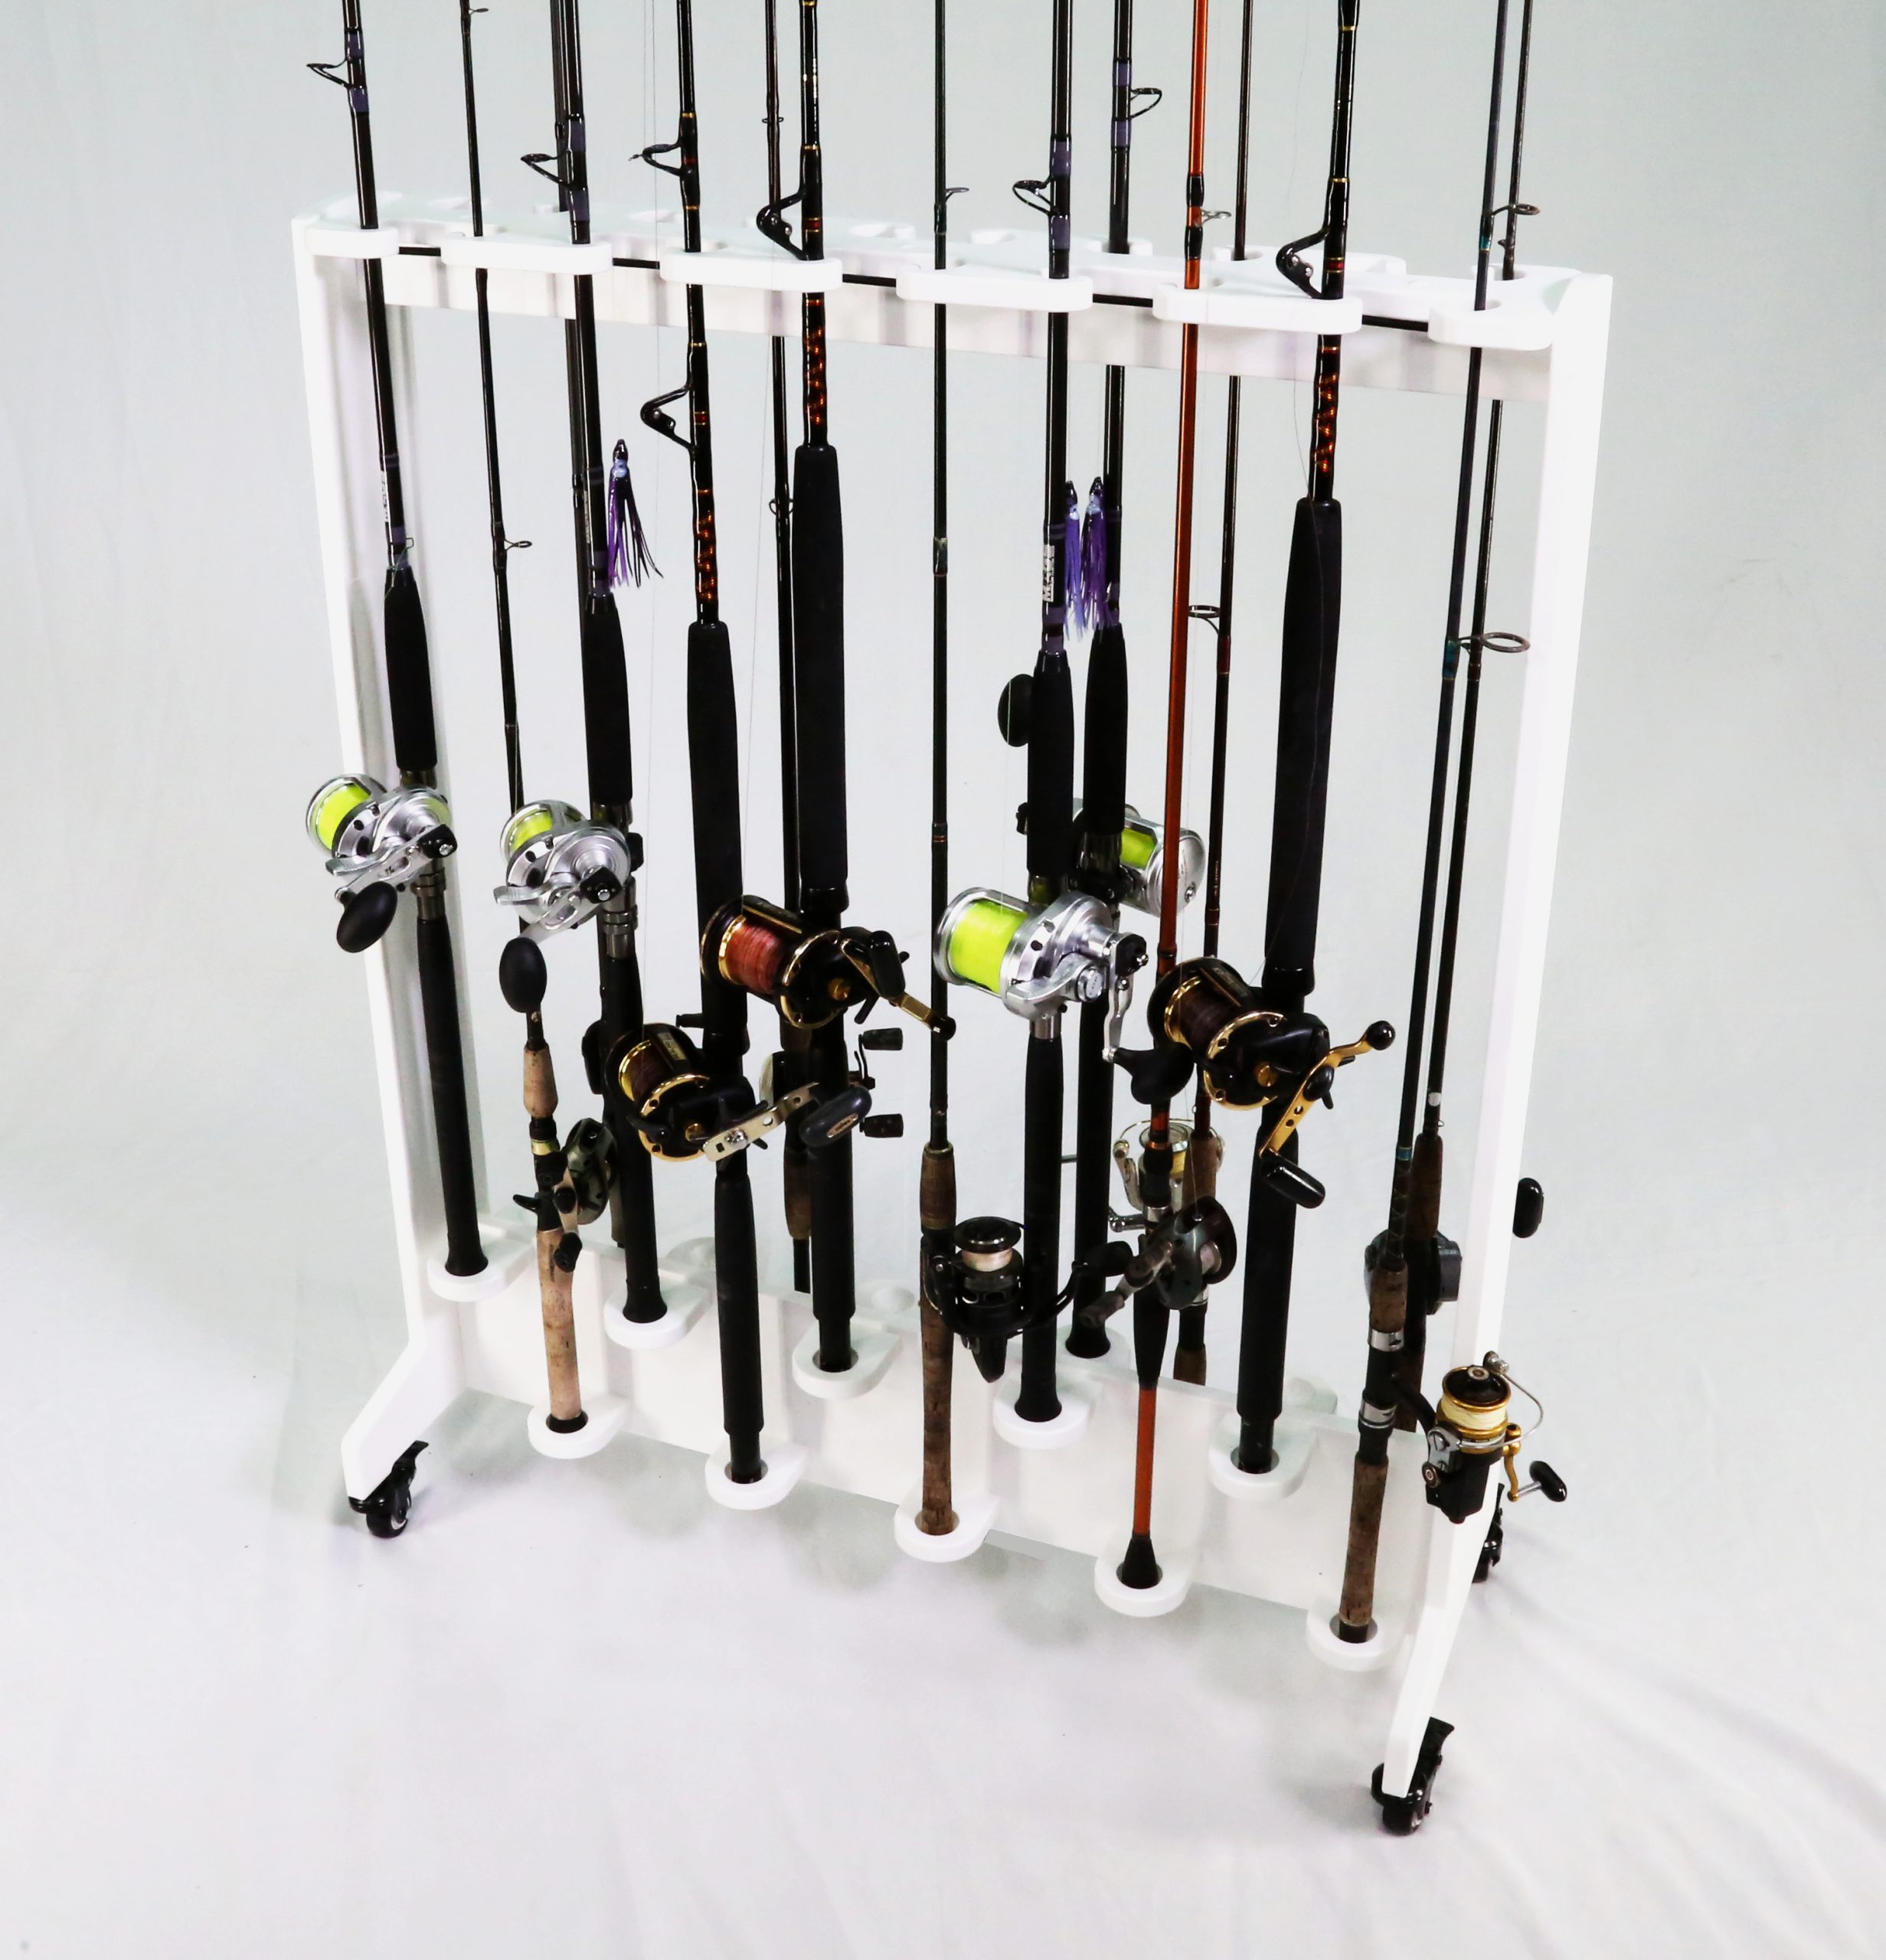 Fishing pole holder / Fishing rod rack / Standing organizer for 20 rods